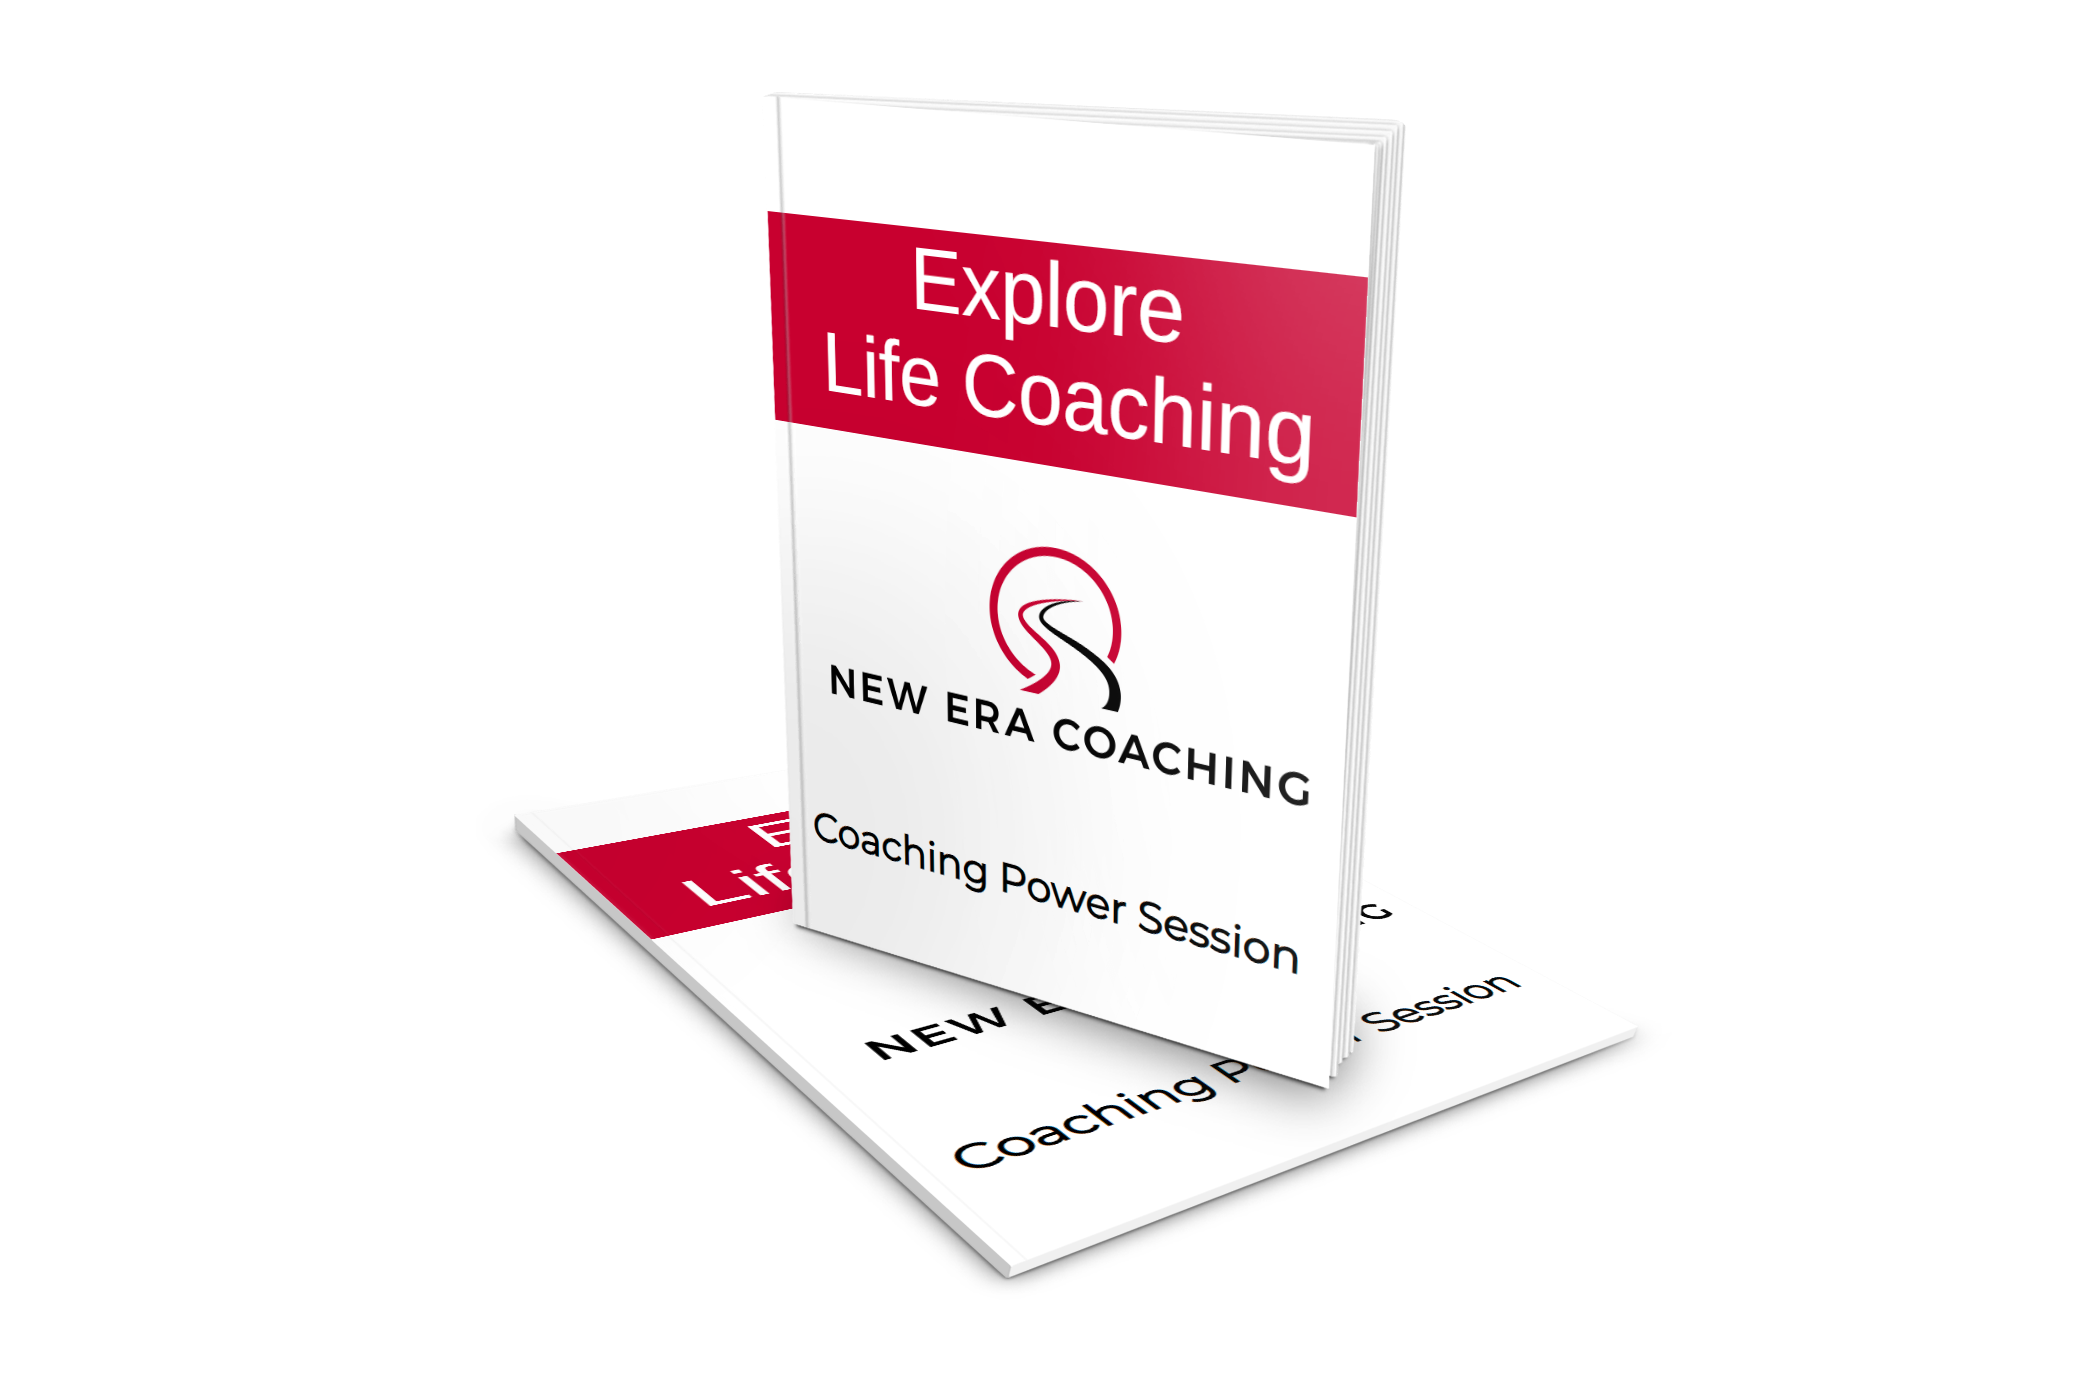 Life Coaching Workbook